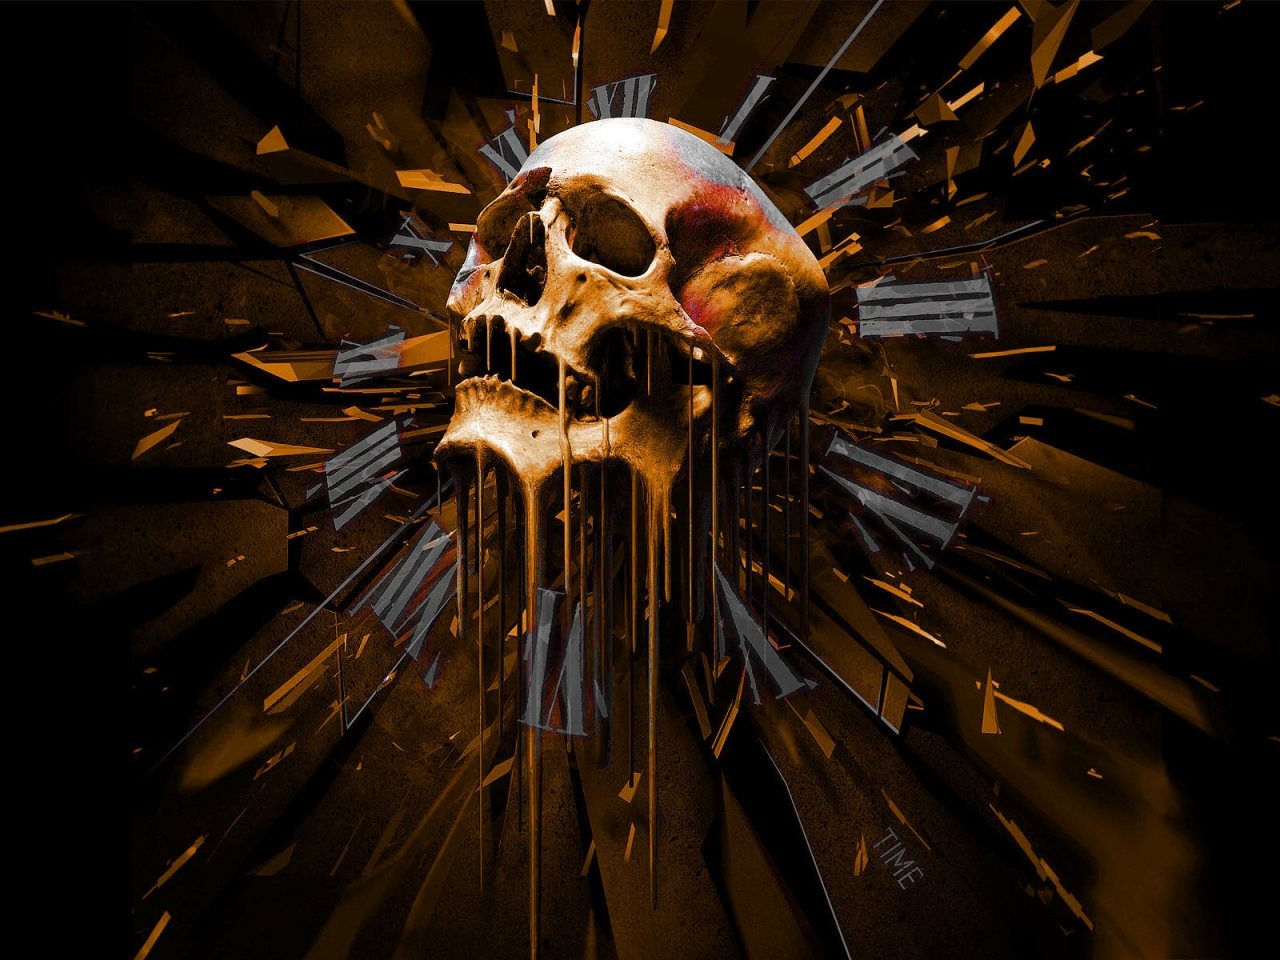 Time Skull for 1280 x 960 resolution